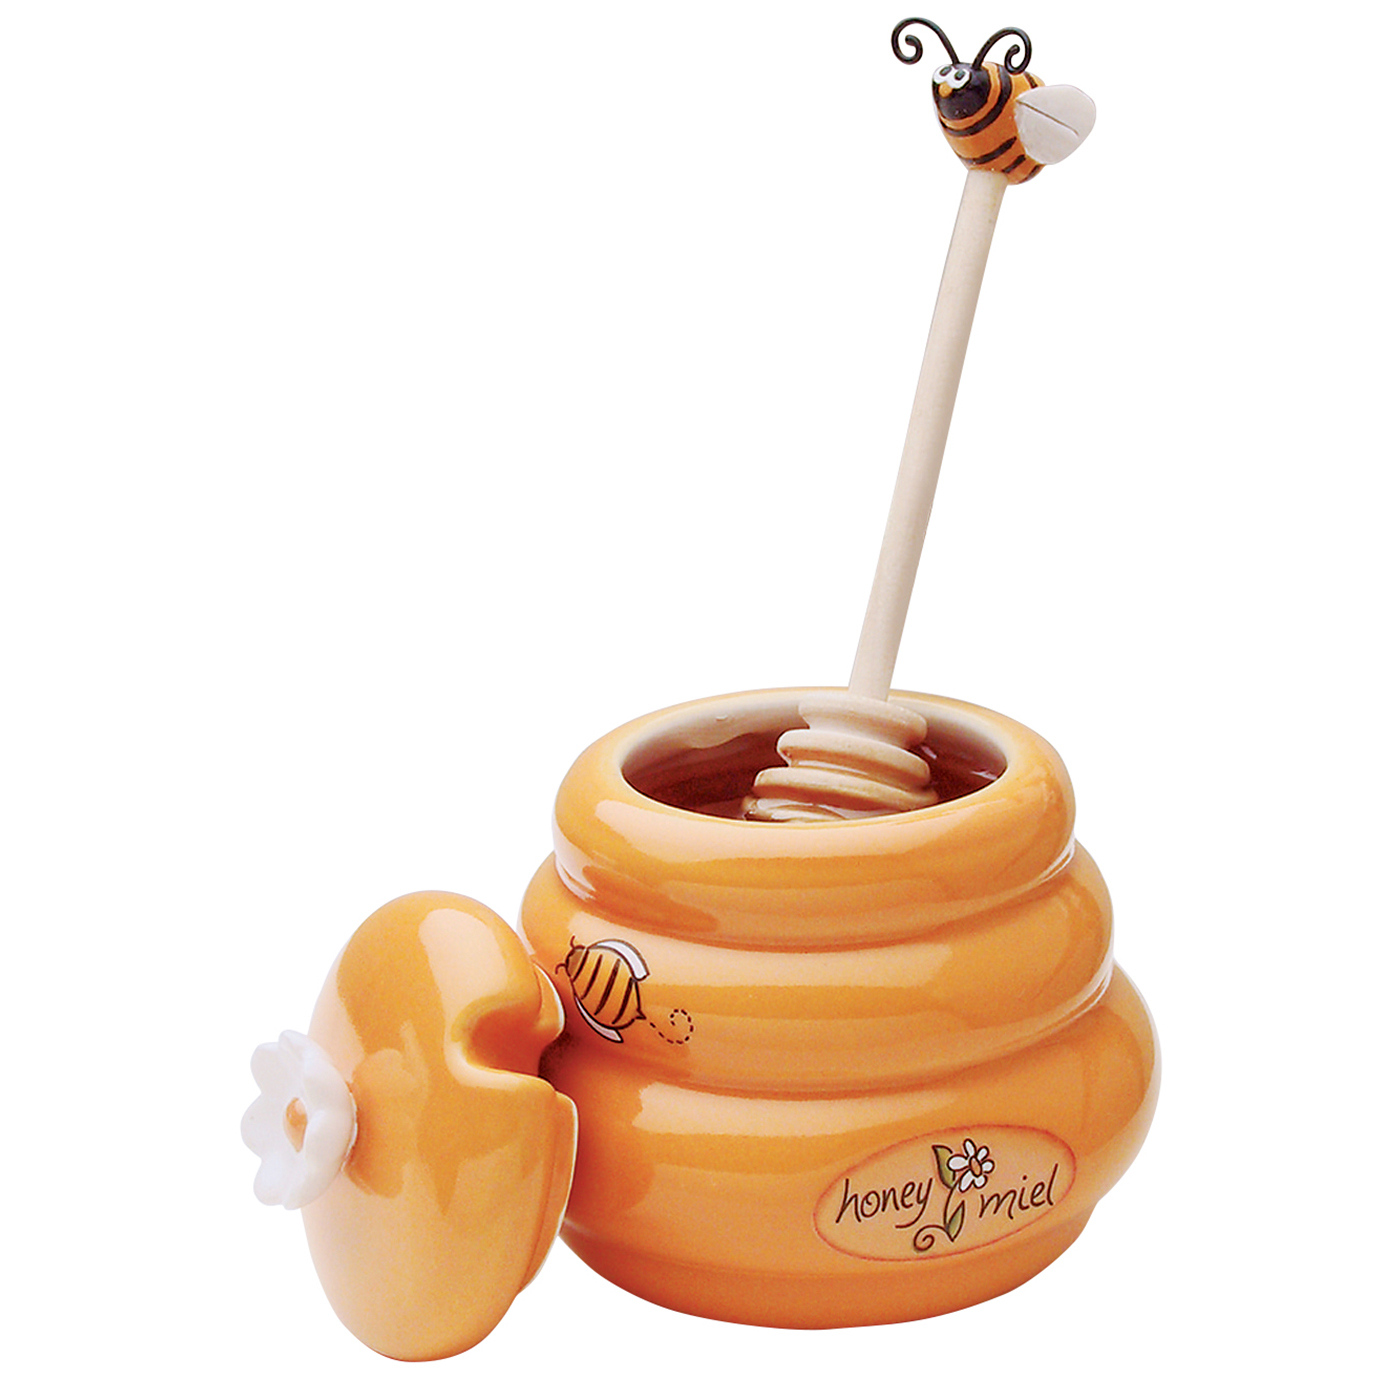 Hic Ceramic Honey Pot And Dipper Set 67742801517 Ebay